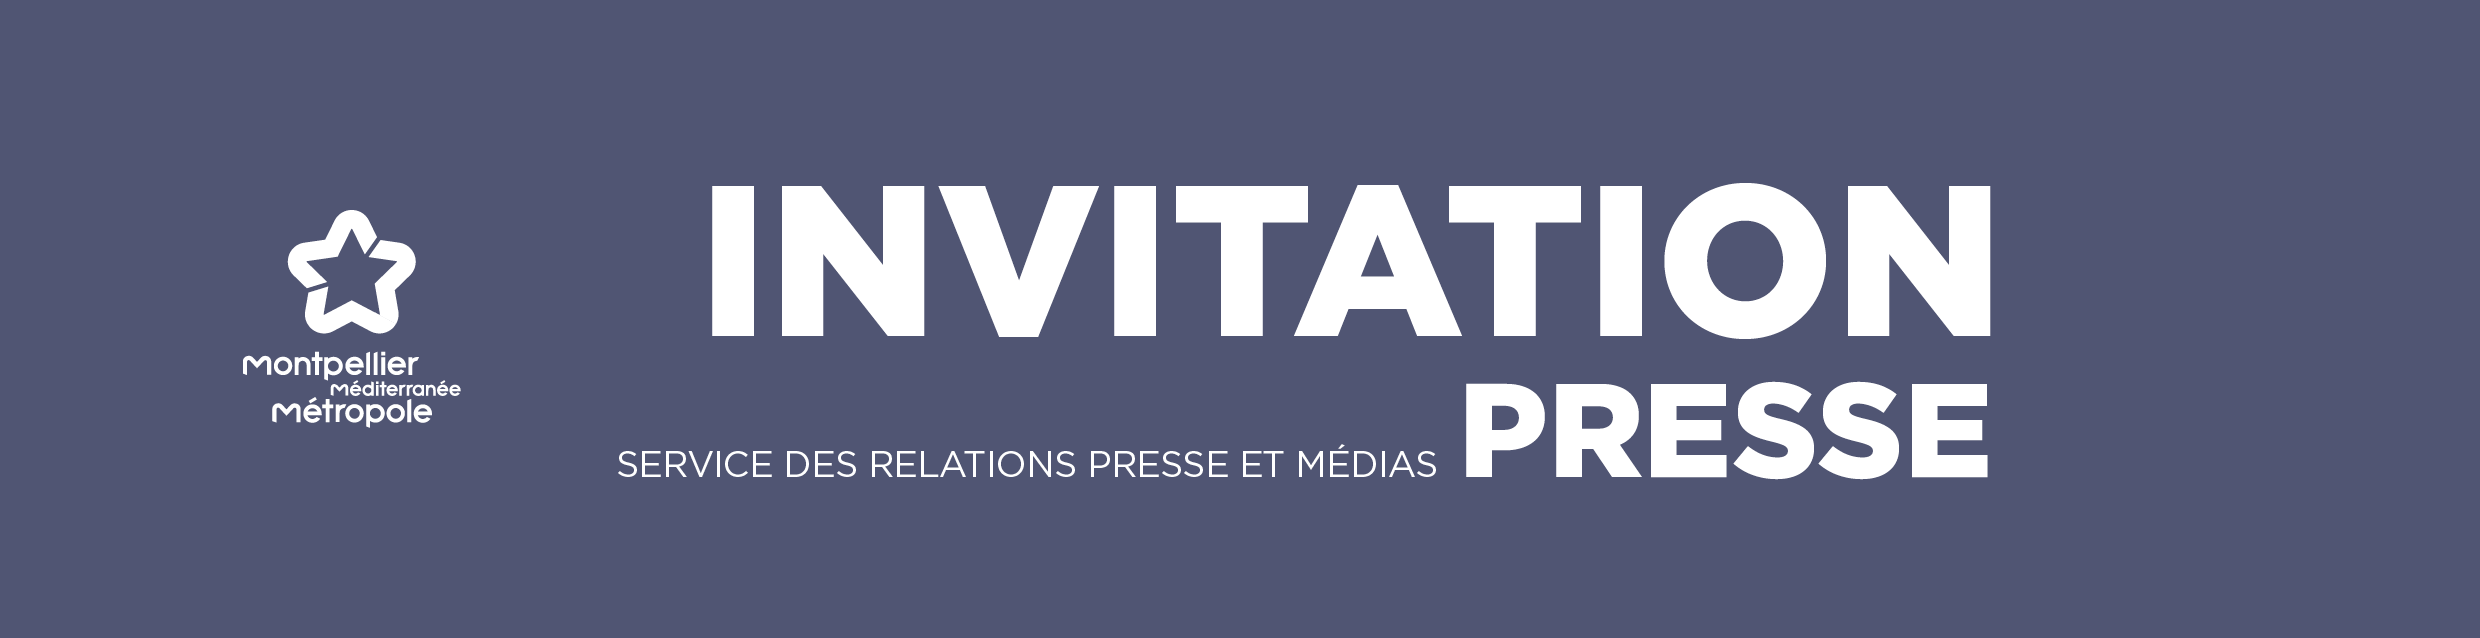 Bandeau Metro-Invitation presse_01 2.png